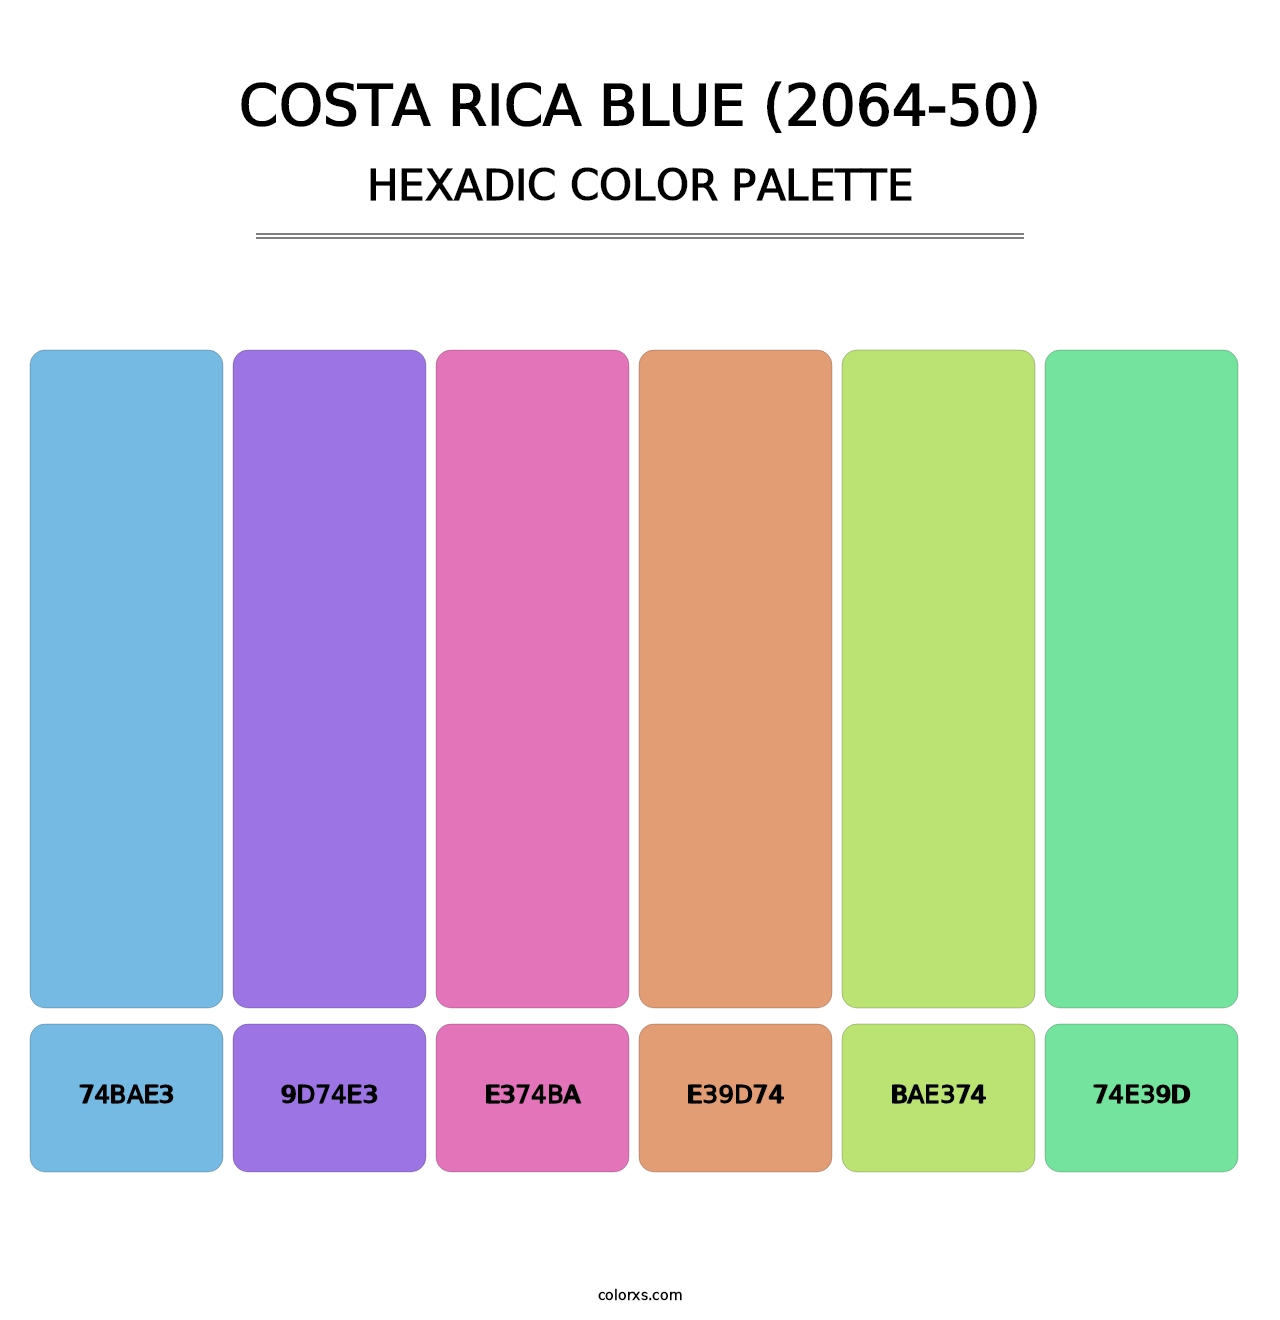 Costa Rica Blue (2064-50) - Hexadic Color Palette